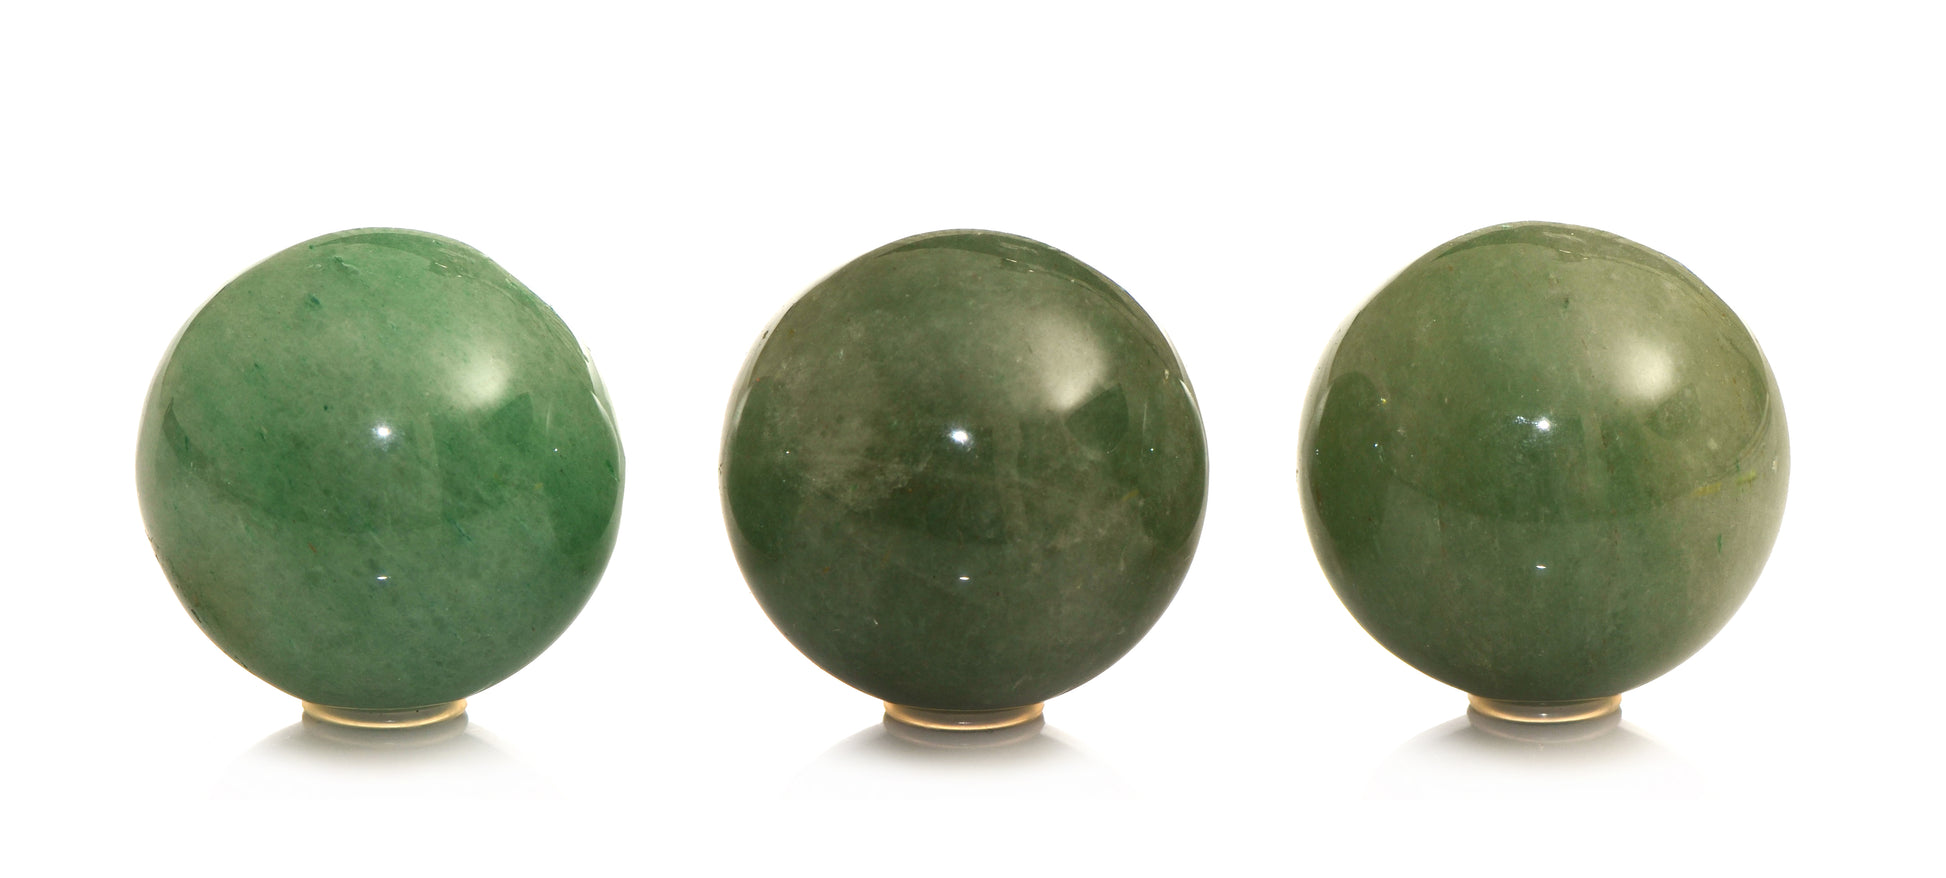 healing crystals: green aventurine sphere